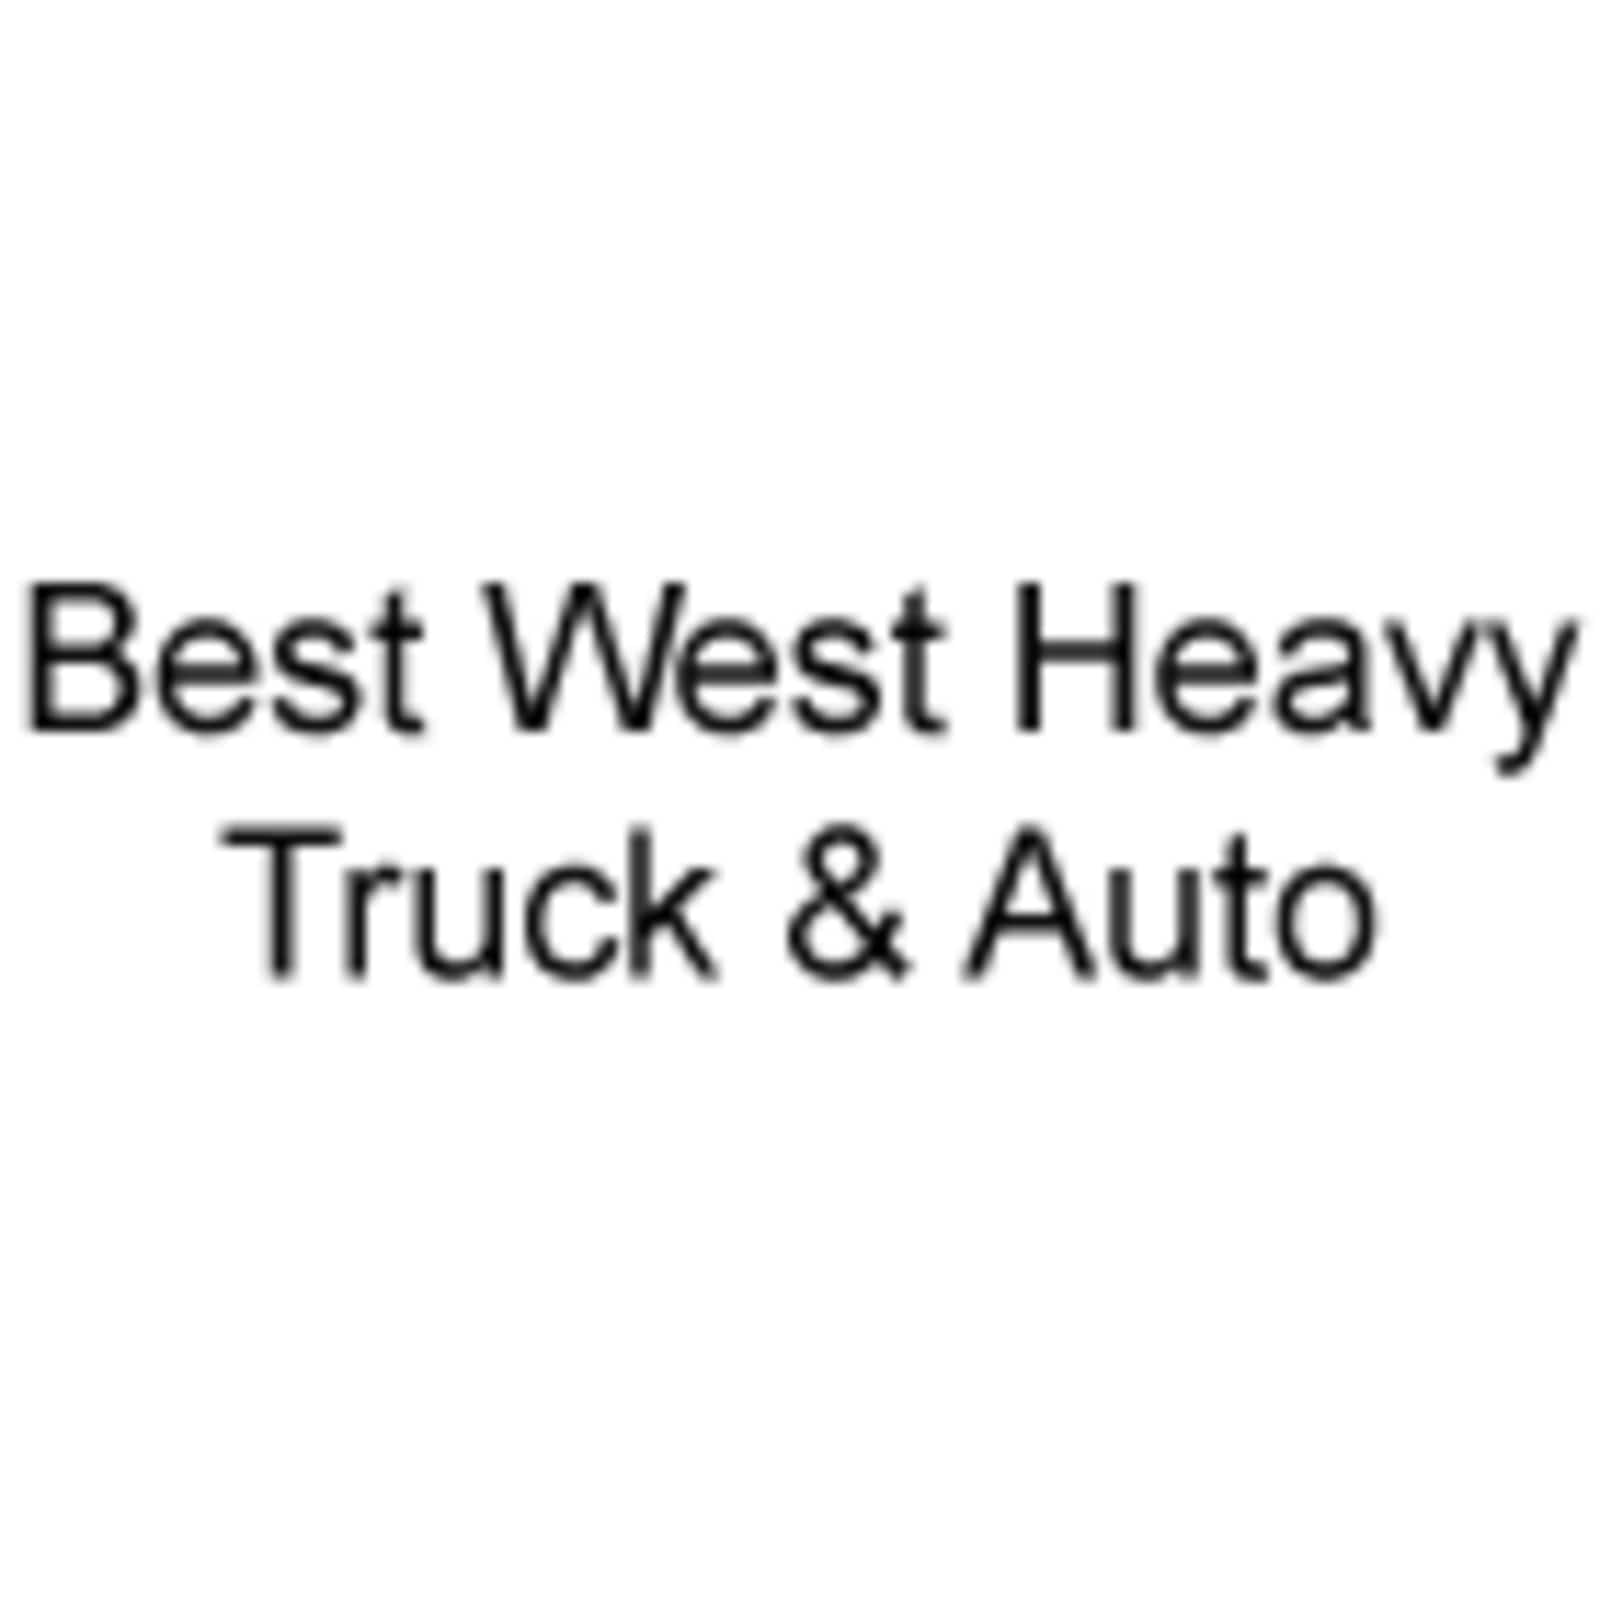 Best West Heavy Truck & Auto